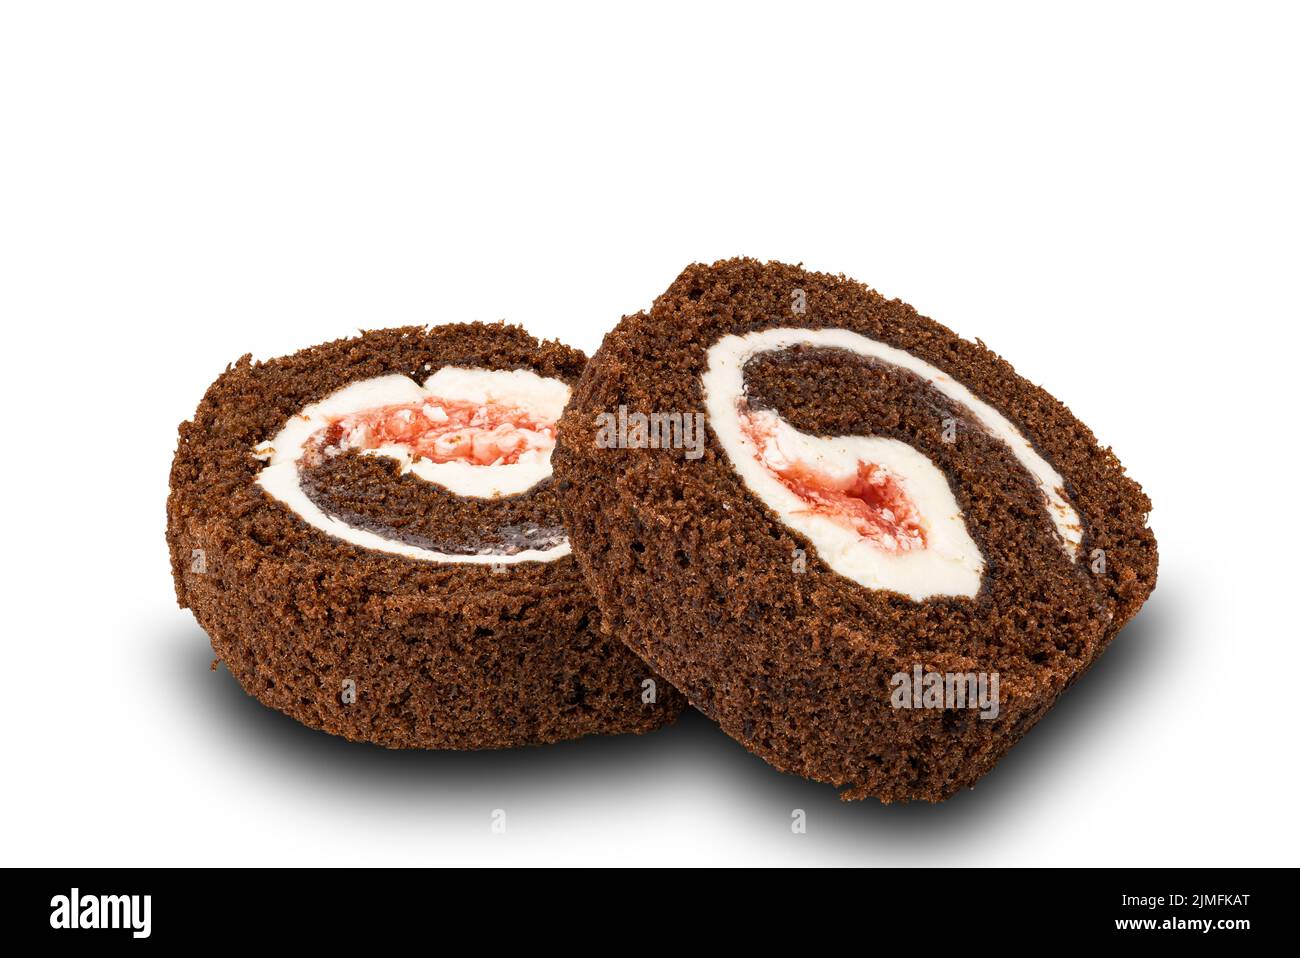 Sliced homemade Mini Black Forest Chocolate Sponge Cake Roll on white background. Stock Photo